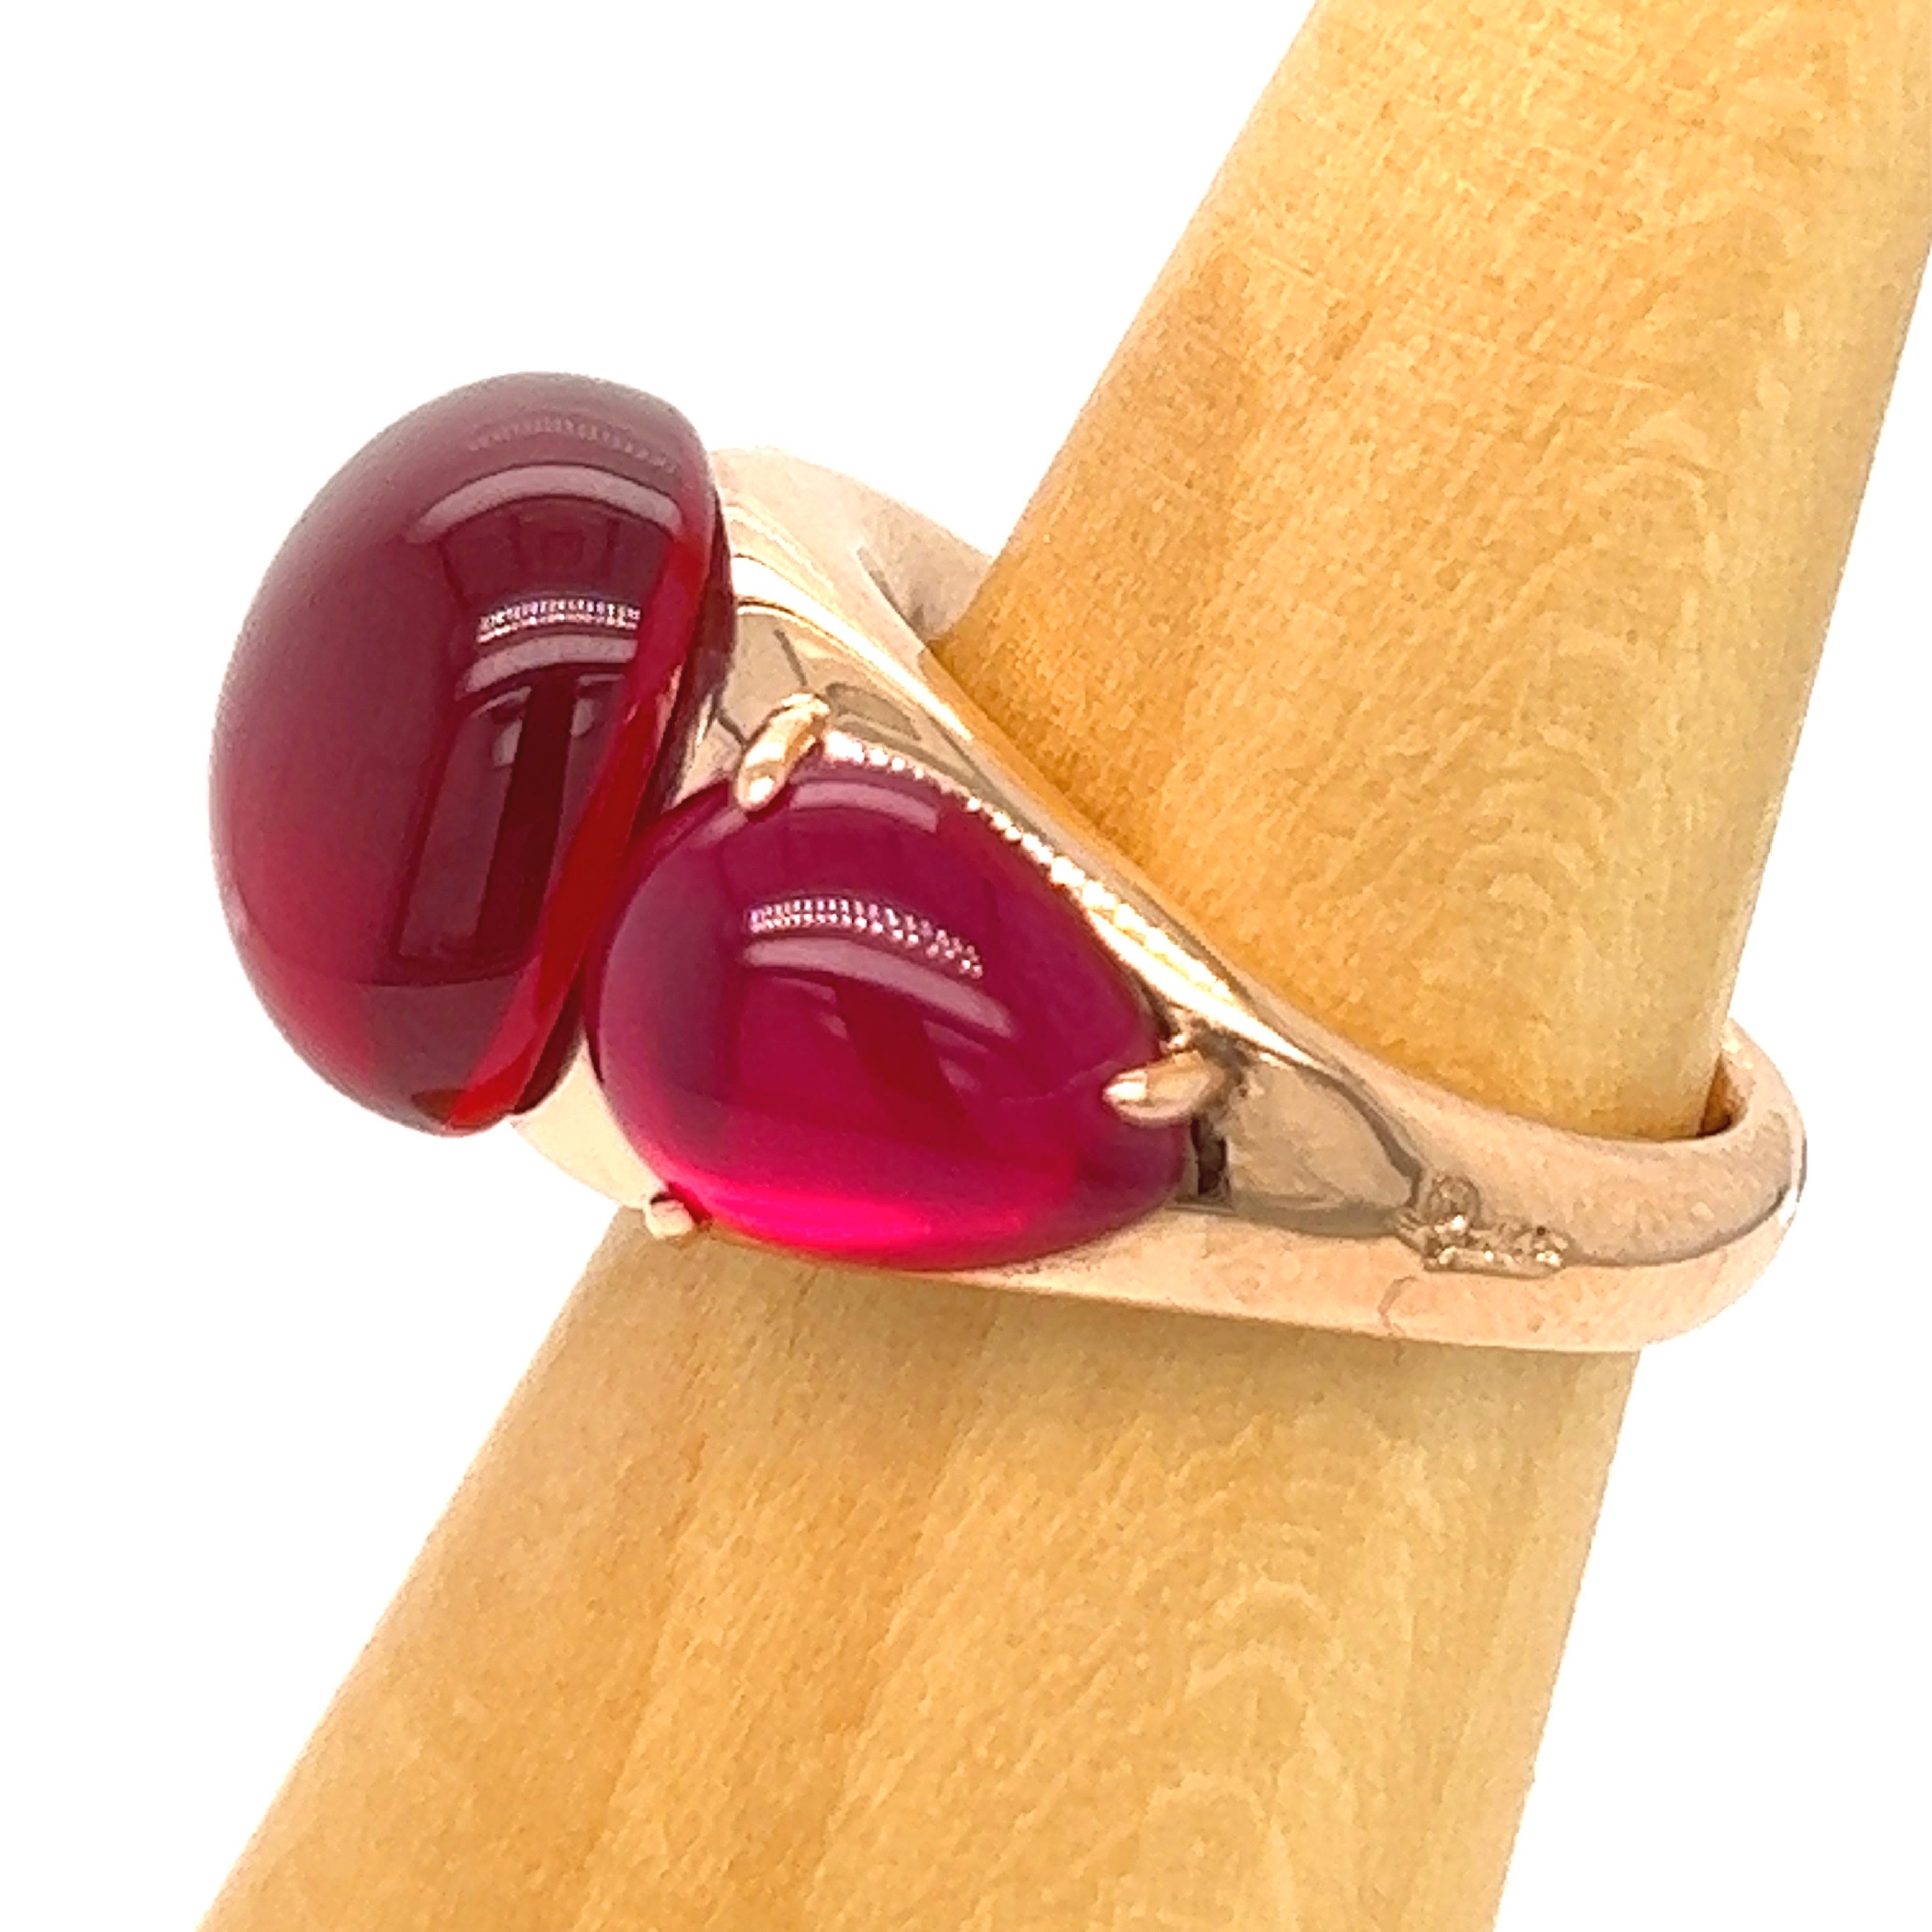 pomellato rouge passion ring